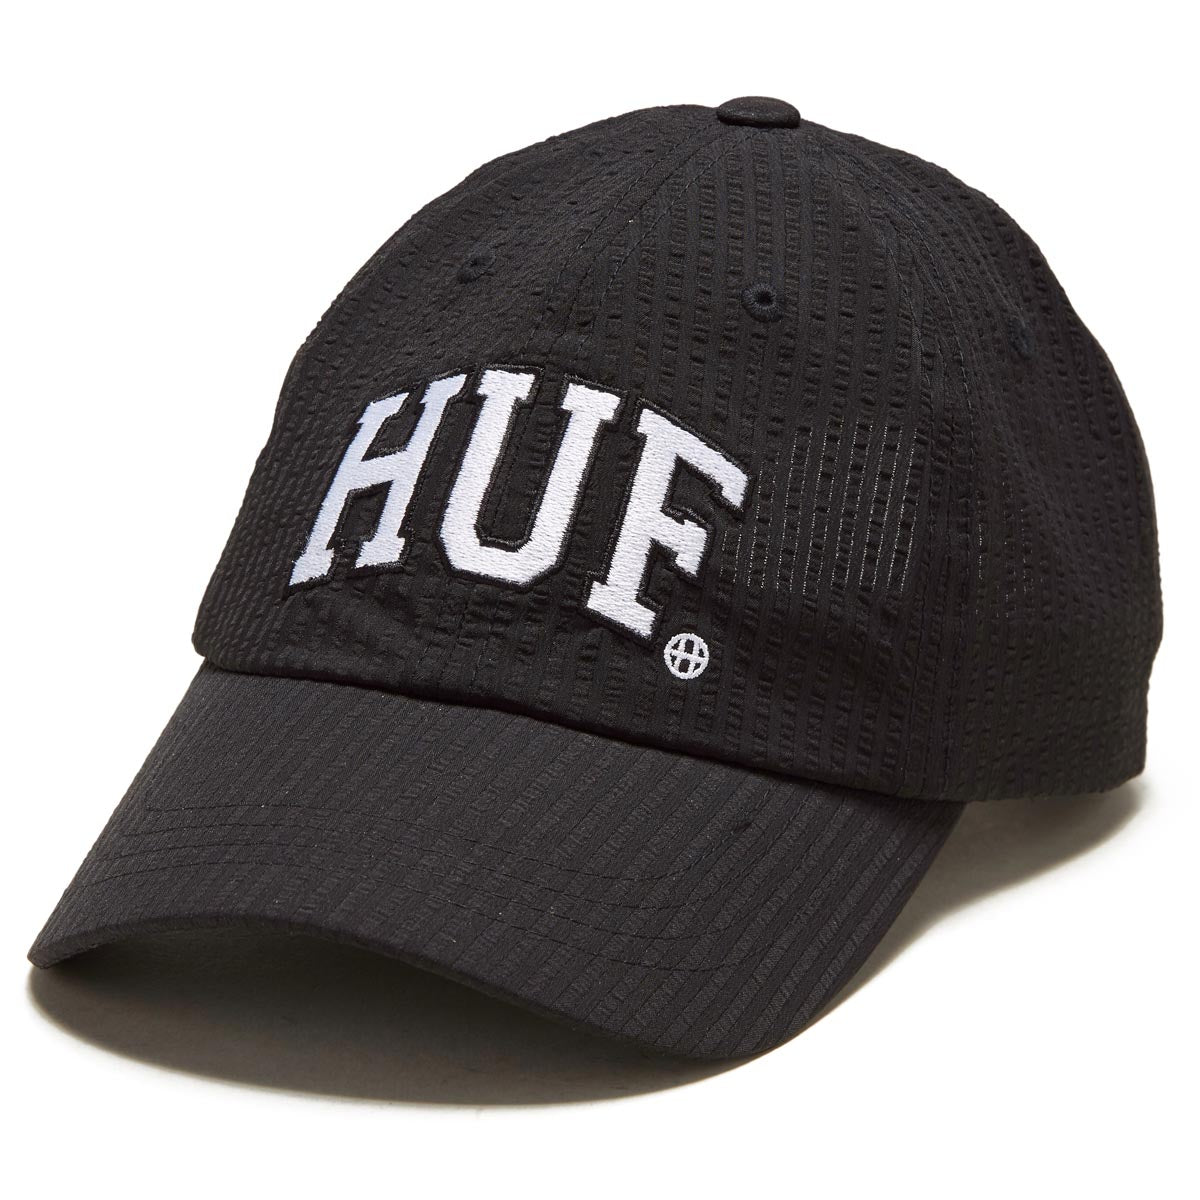 HUF Arch Logo CV 6 Panel Hat - Black image 1